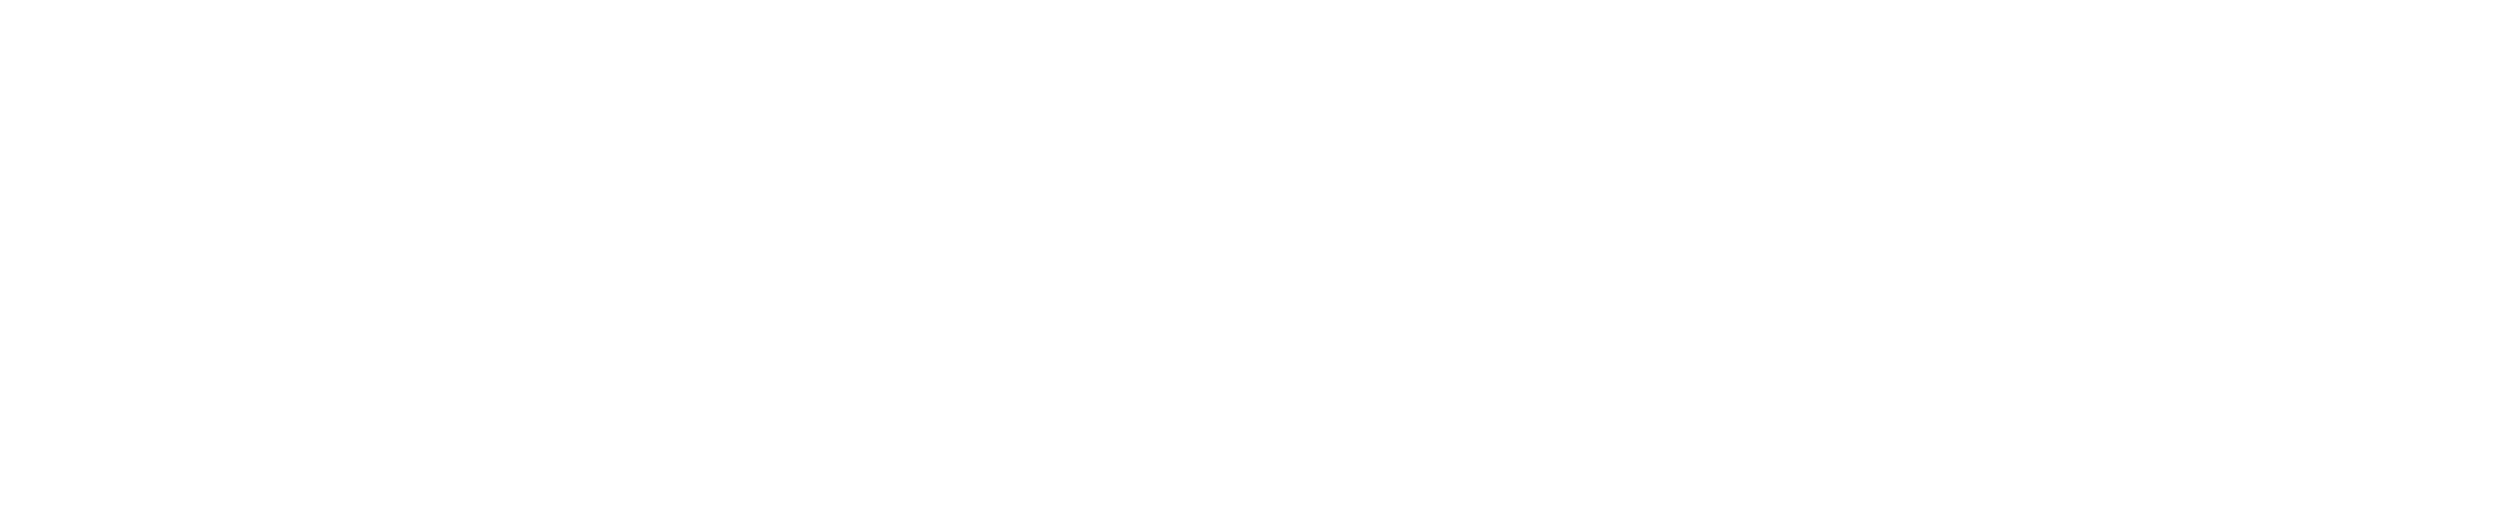 Xrayvision hompage